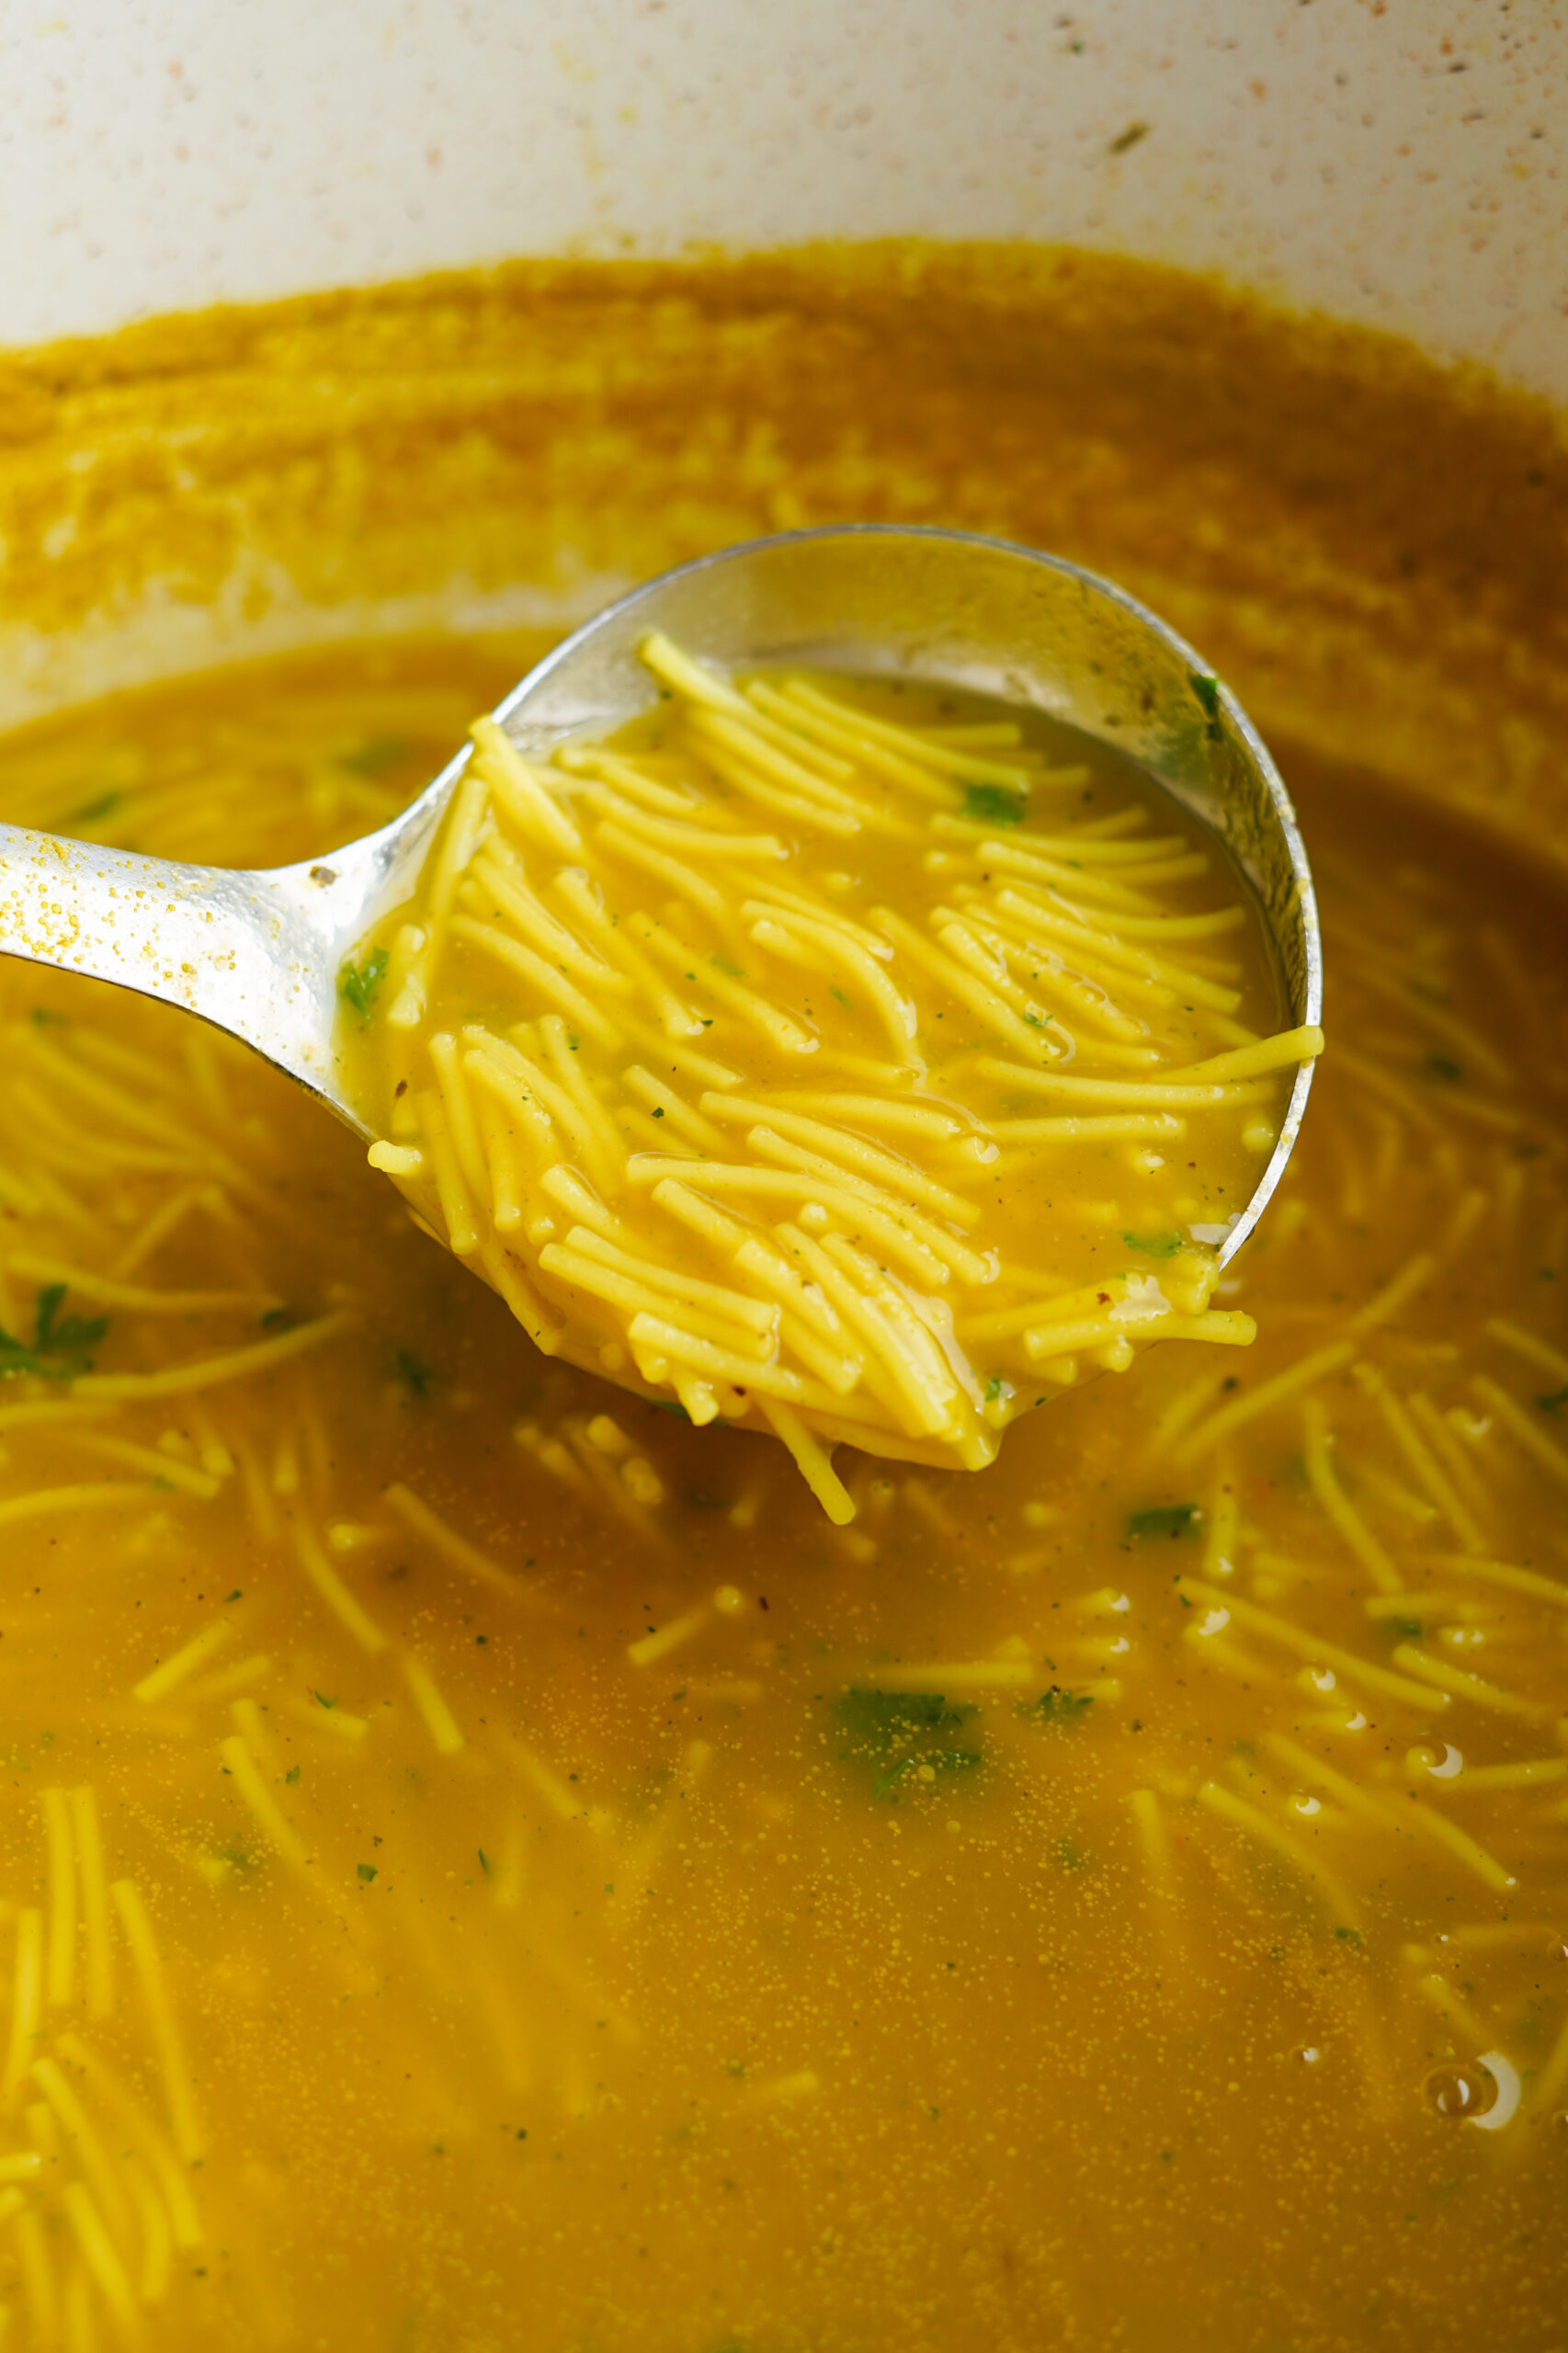 Vegan Chicken Noodle Soup (with Soy Curls) - The Hidden Veggies